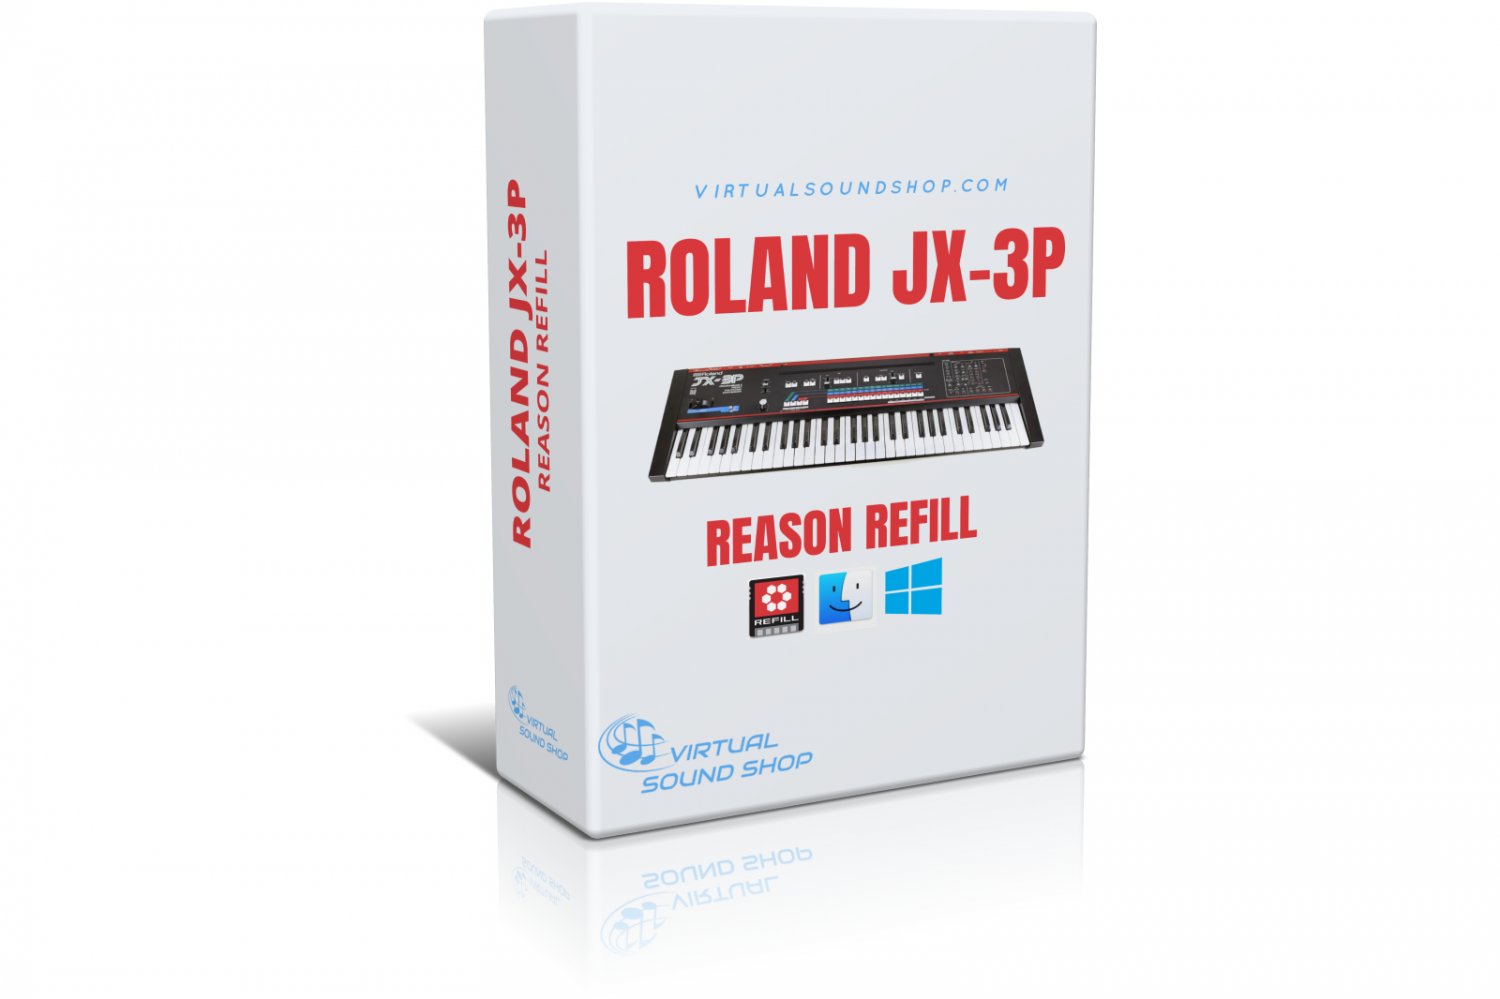 Roland JX-3P Reason Refill Expansion Bank